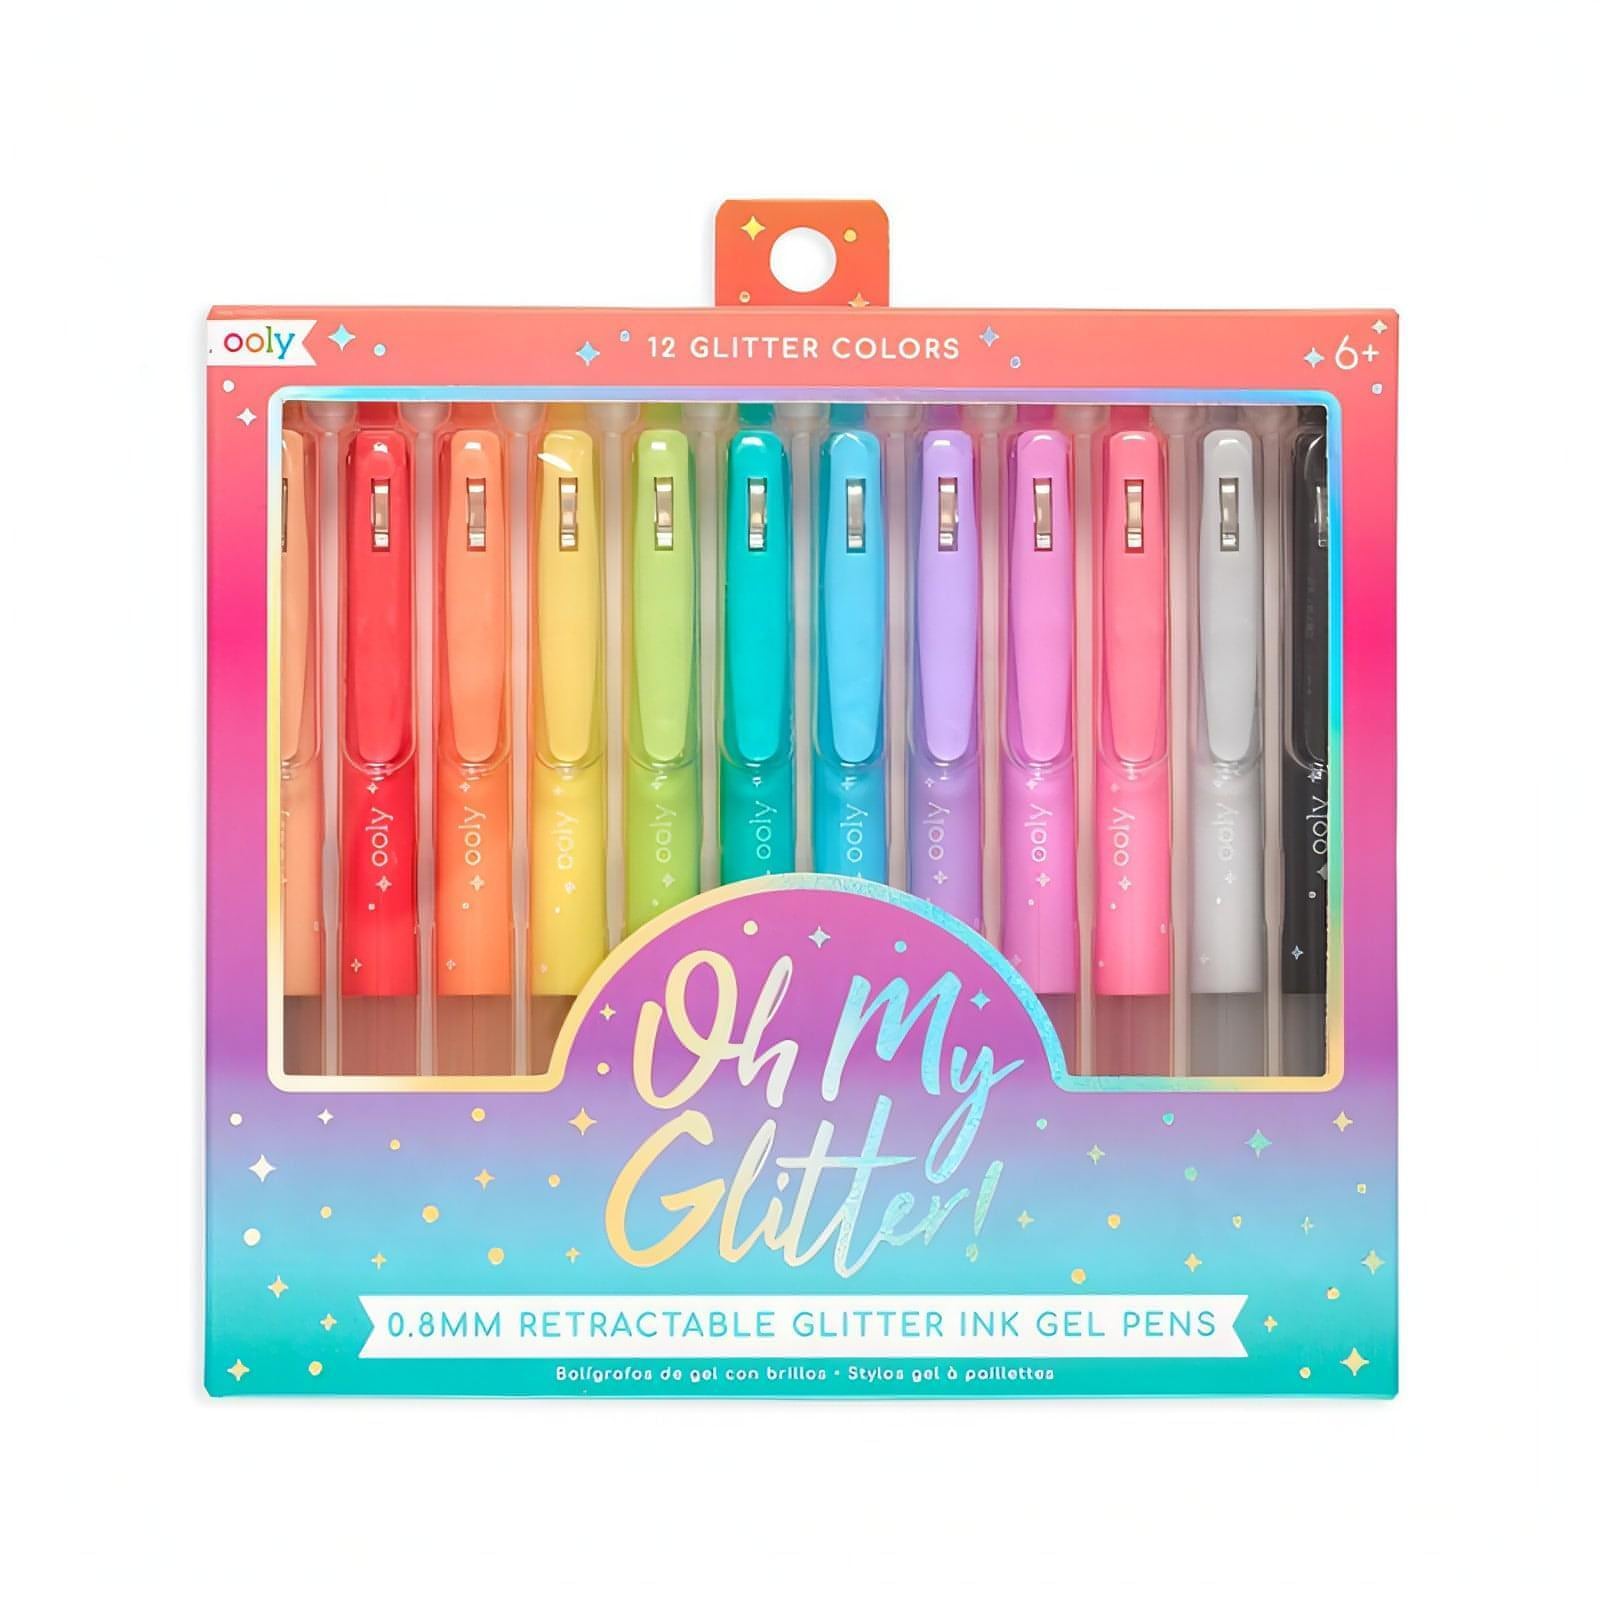 WIN-MARKET Conjunto de canetas de gel moda bonito cor doce